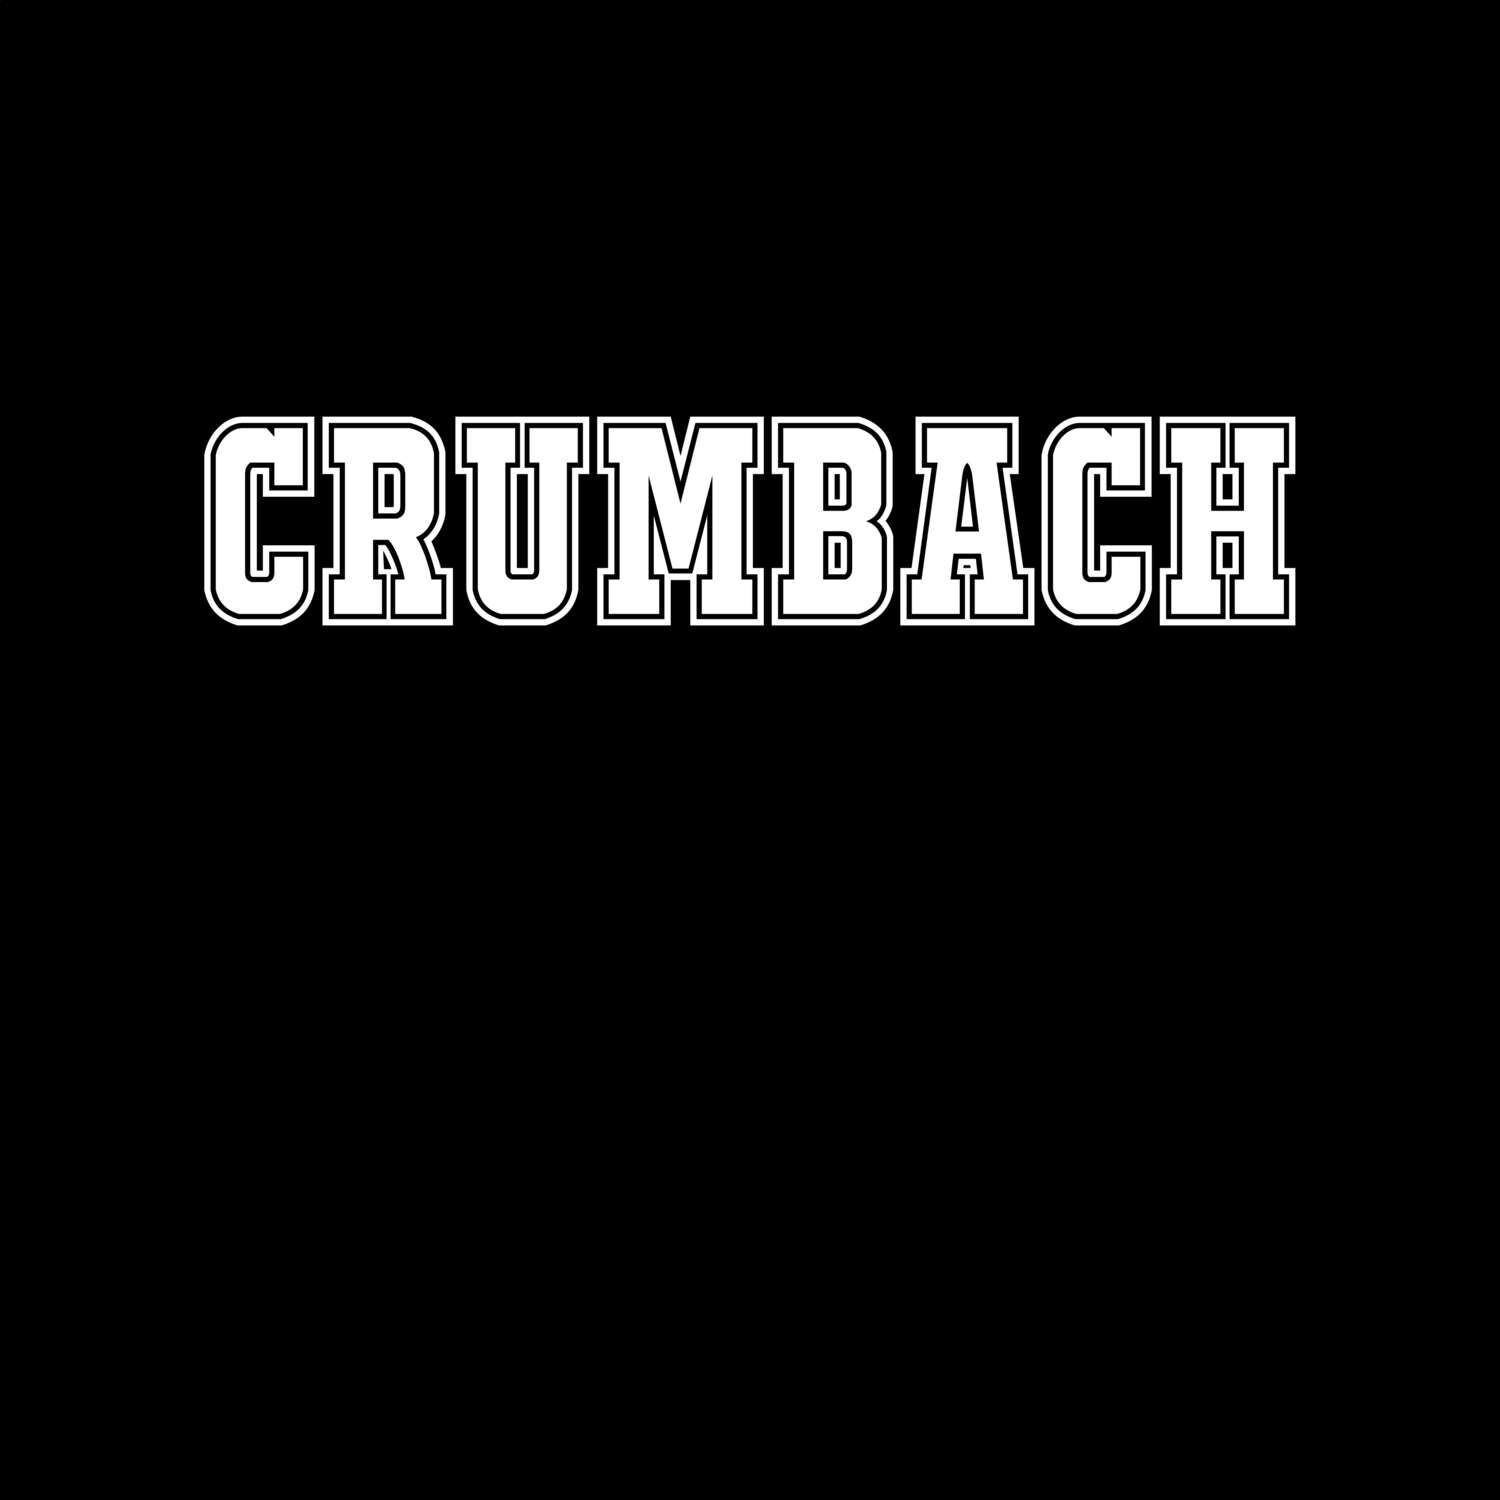 Crumbach T-Shirt »Classic«